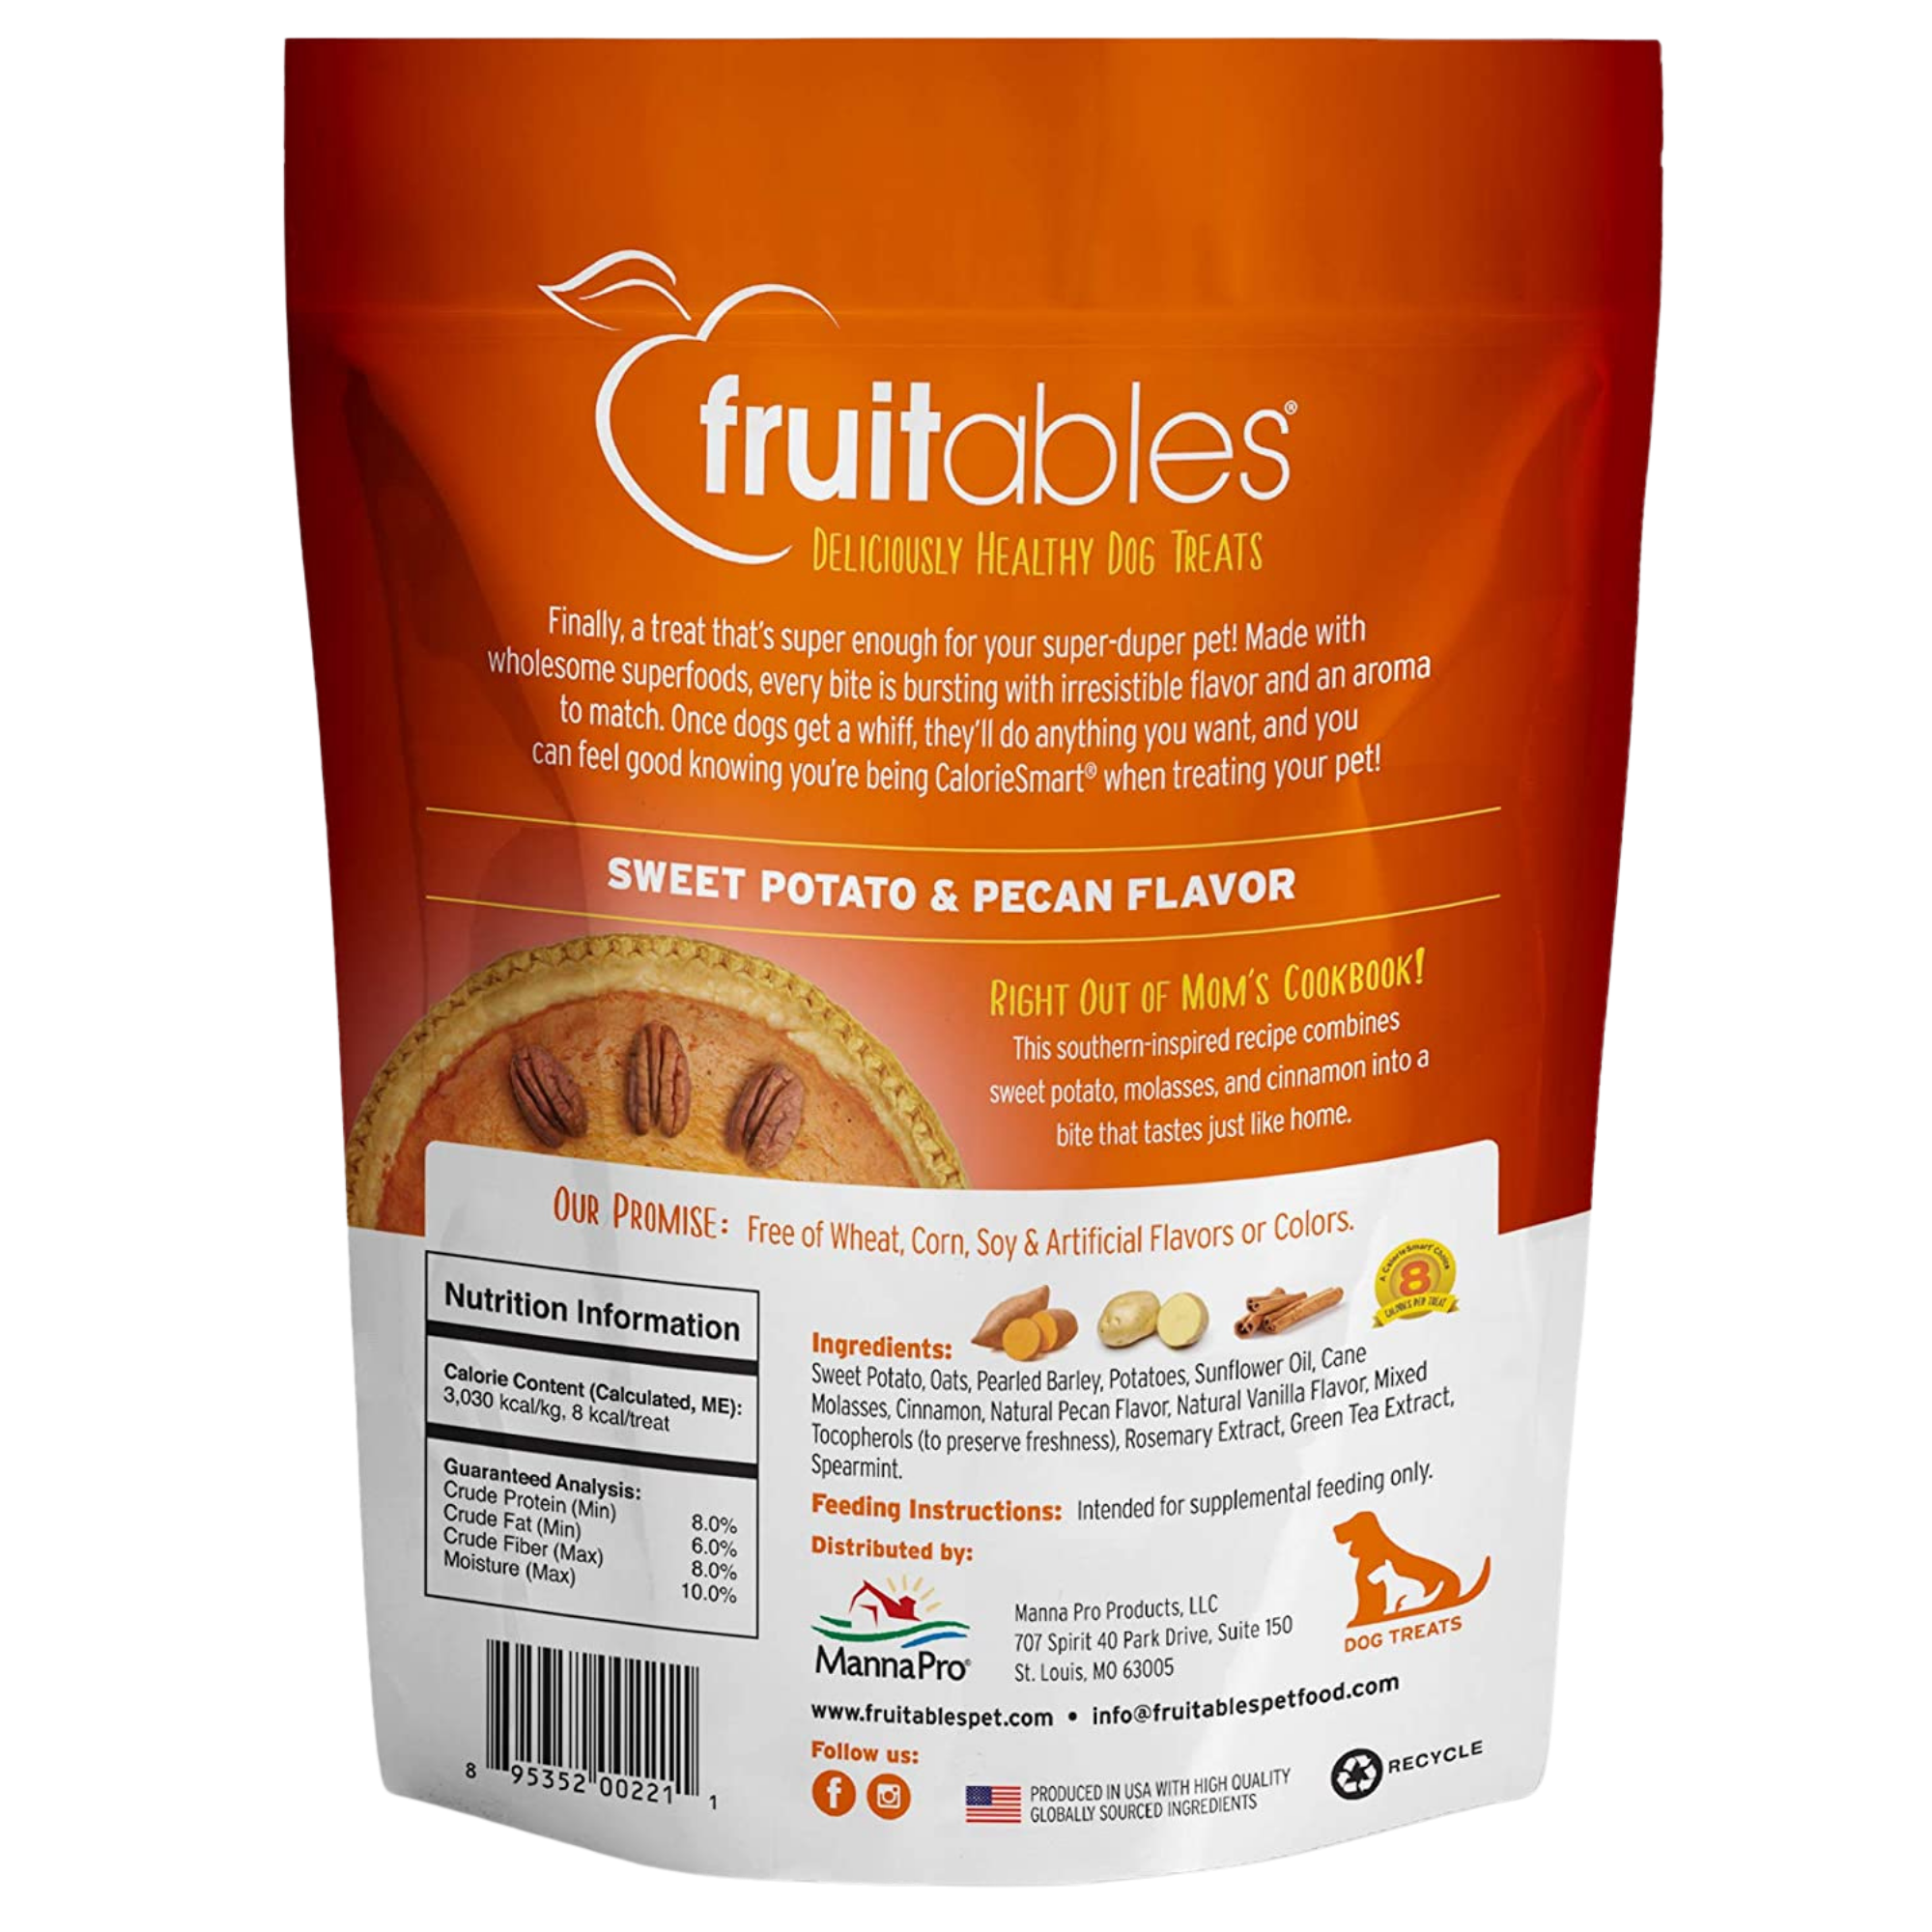 Fruitables Sweet Potato & Pecan Flavor Crunchy Dog Treats 7oz - Mutts & Co.